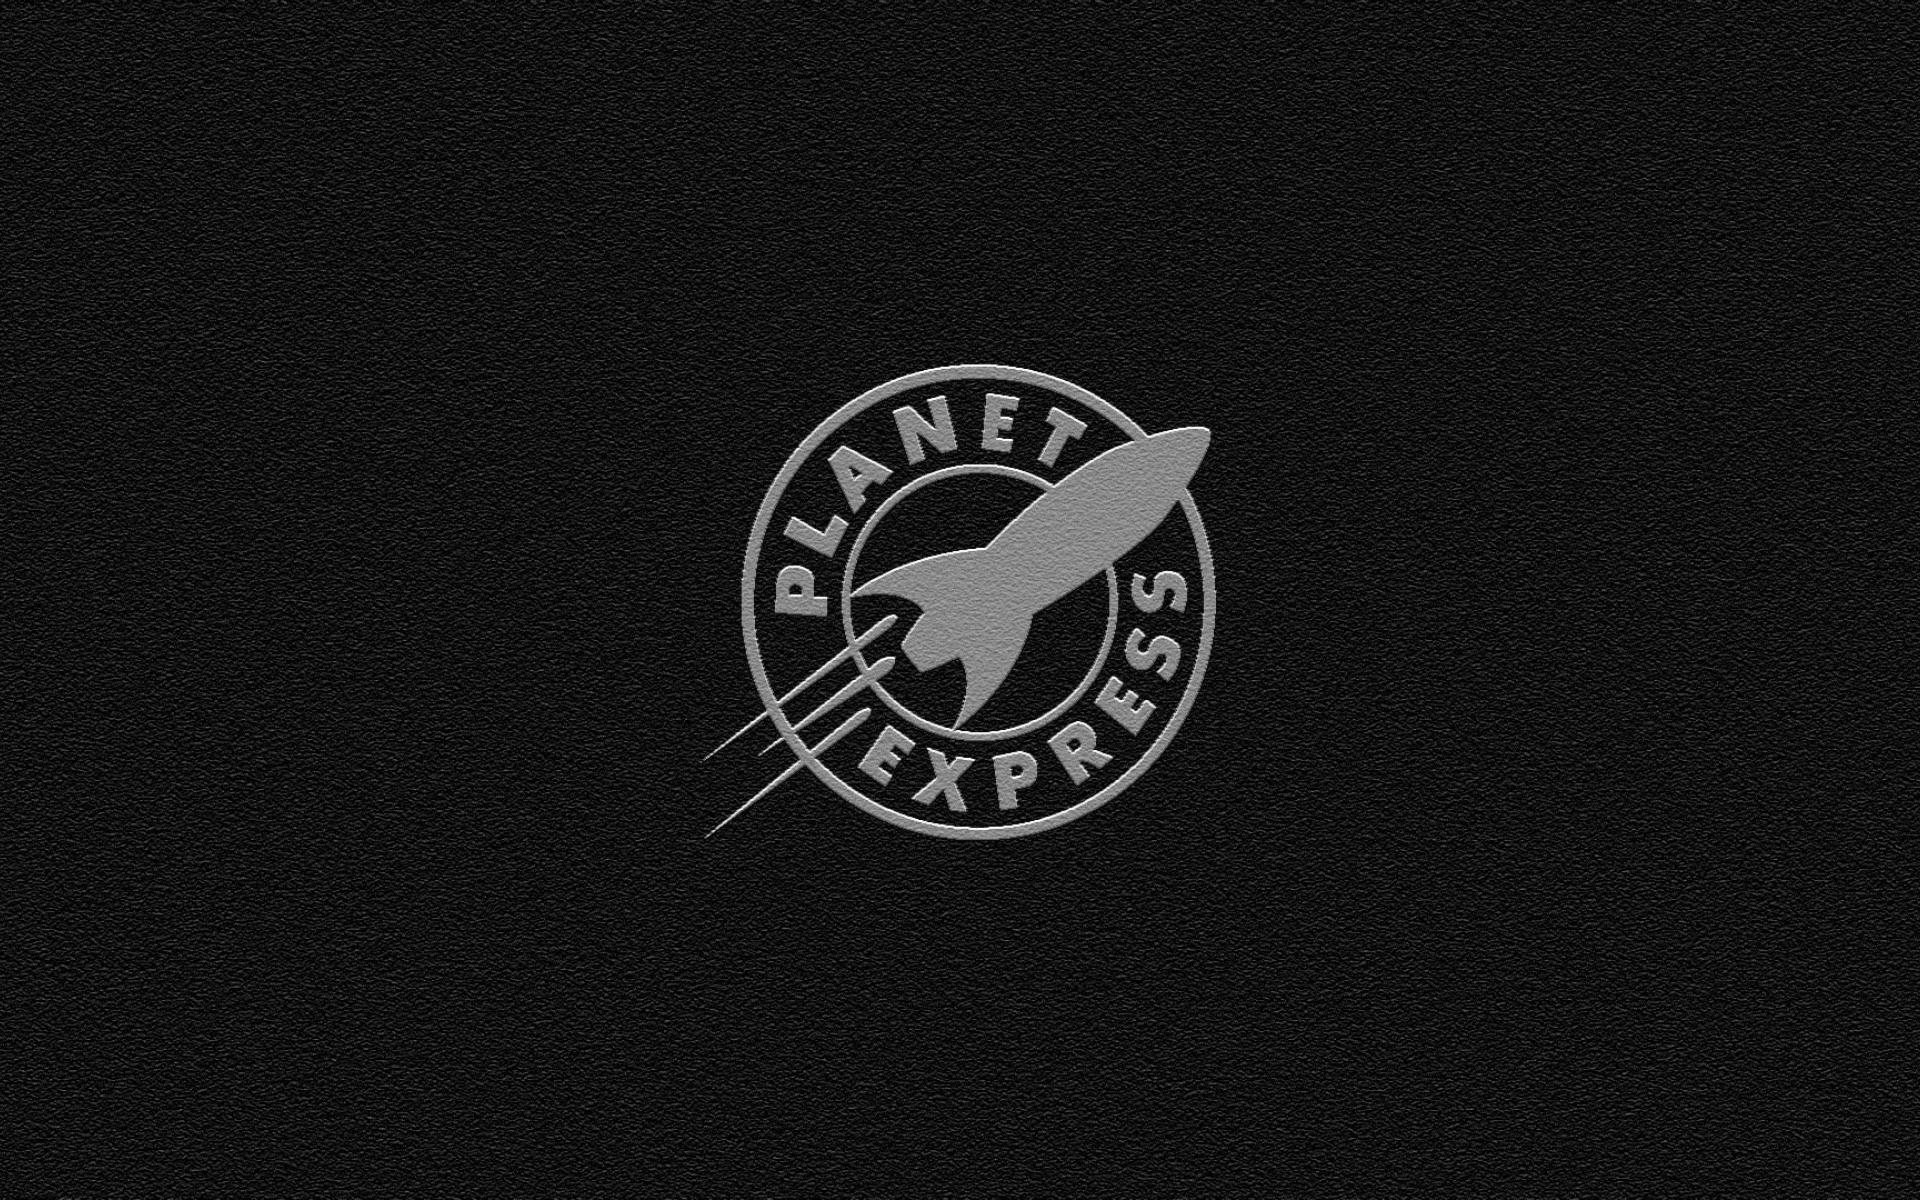 Planet express wallpaper 1920x1080 HQ WALLPAPER   35467